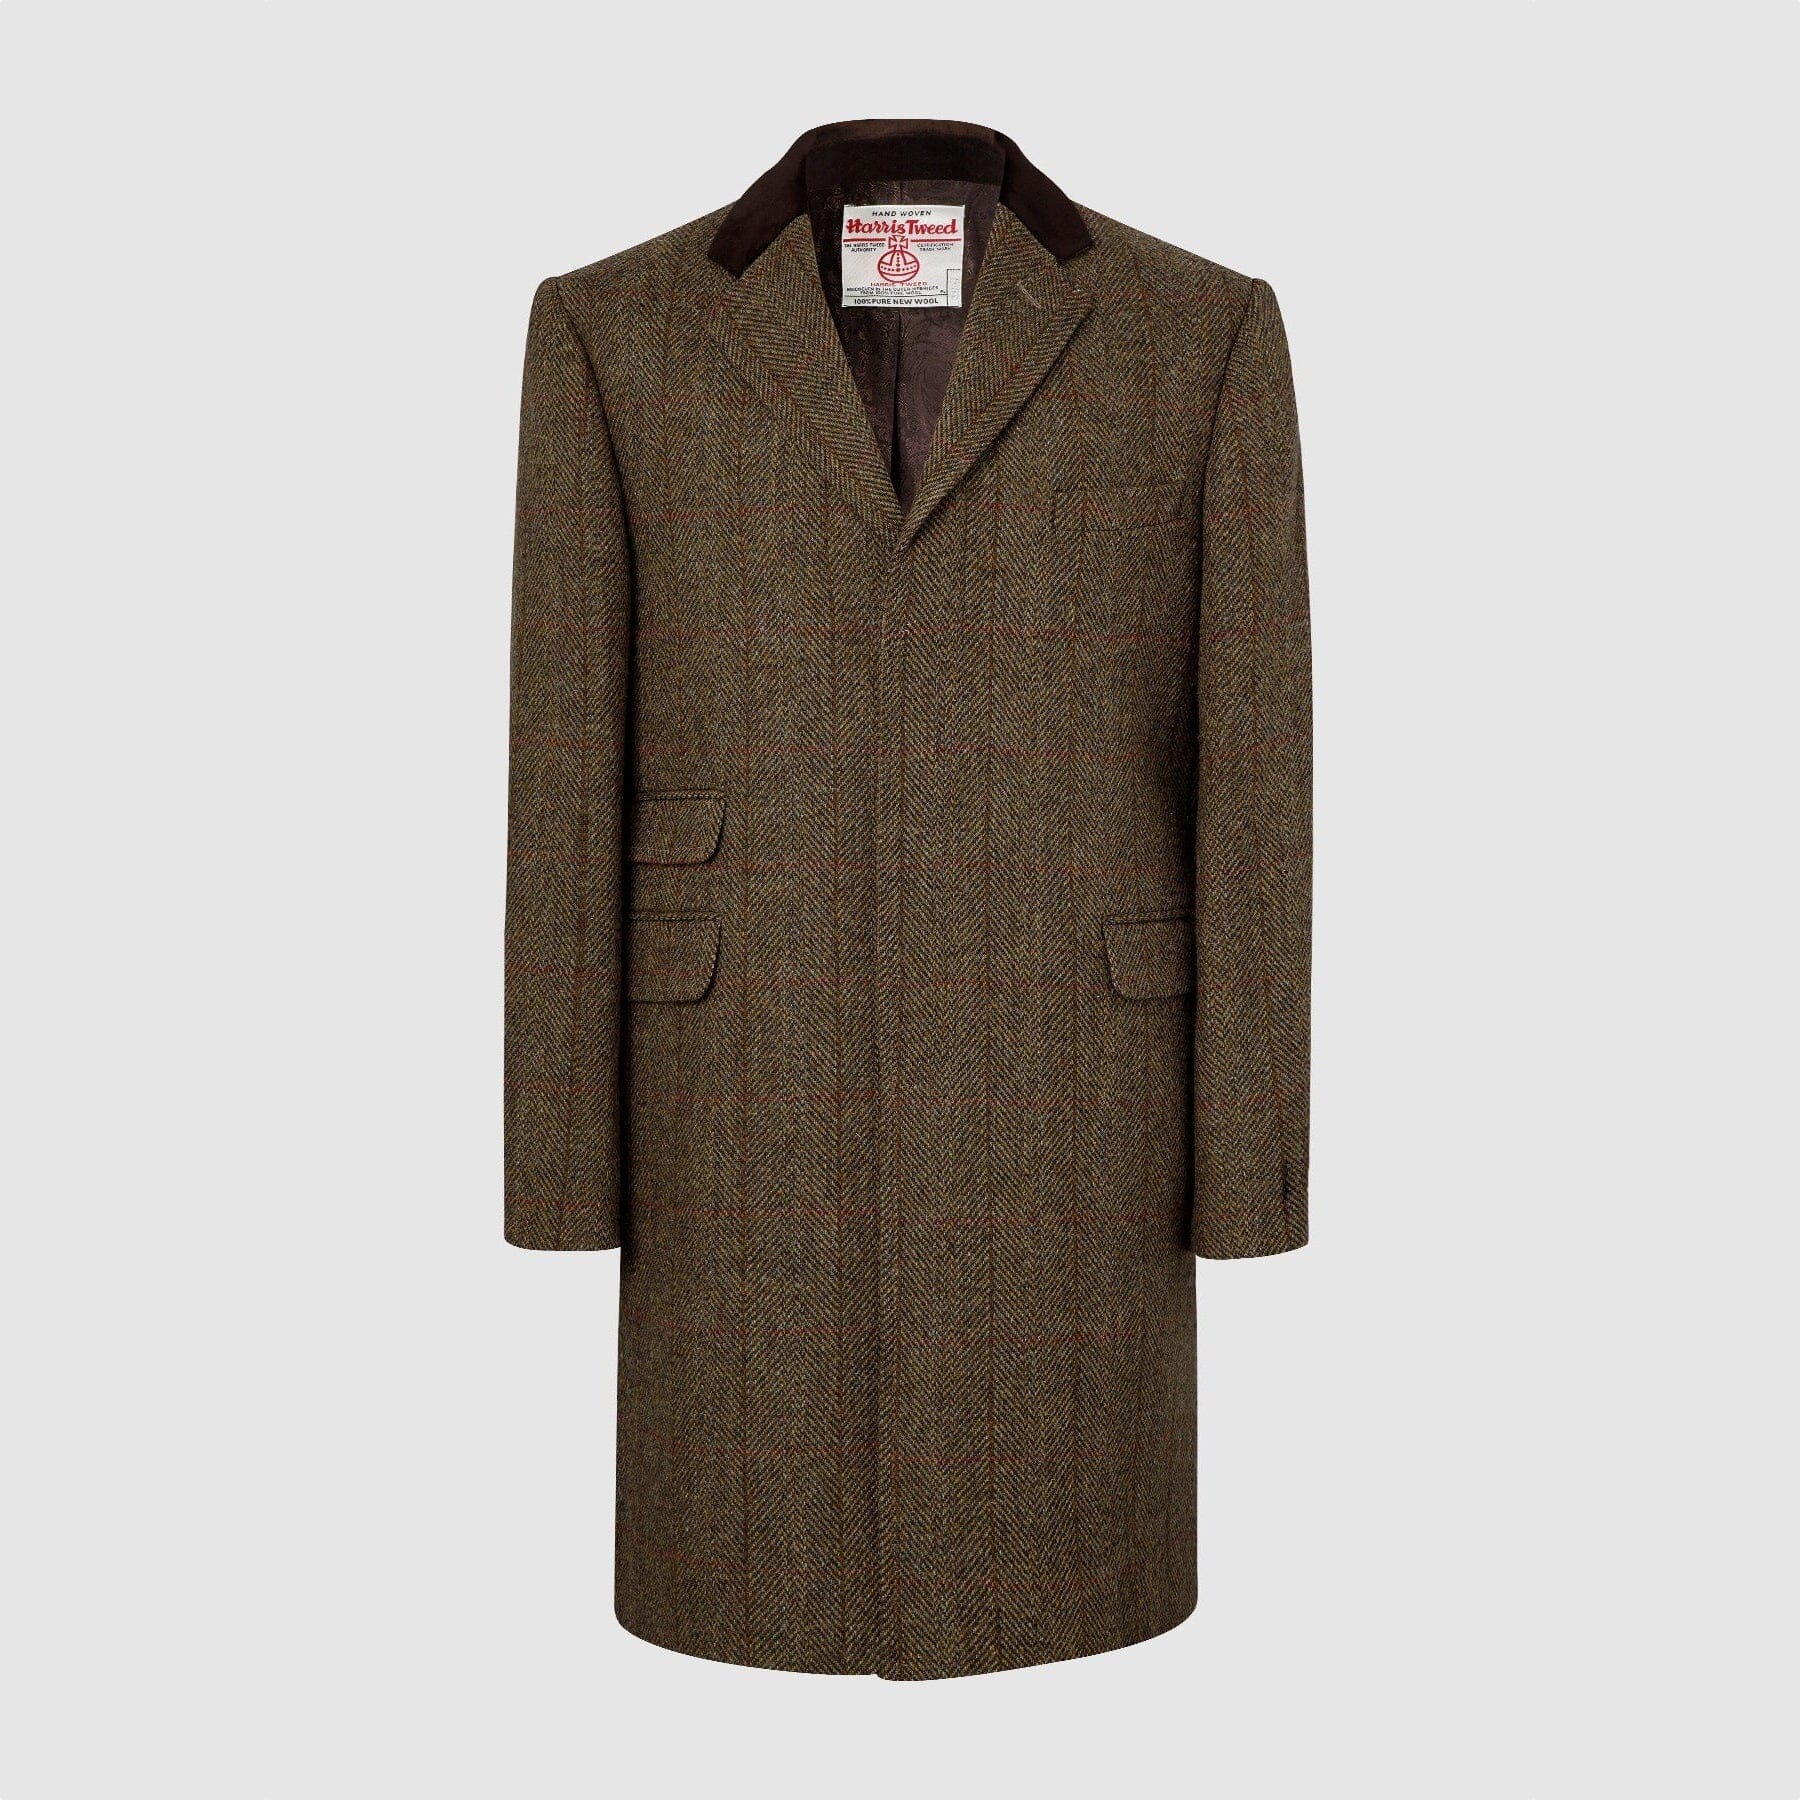 Se Chelsea Mens Overcoat frakke, brun herringbone, Harris Tweed - 52 UK (62 EU) hos Godsejeren